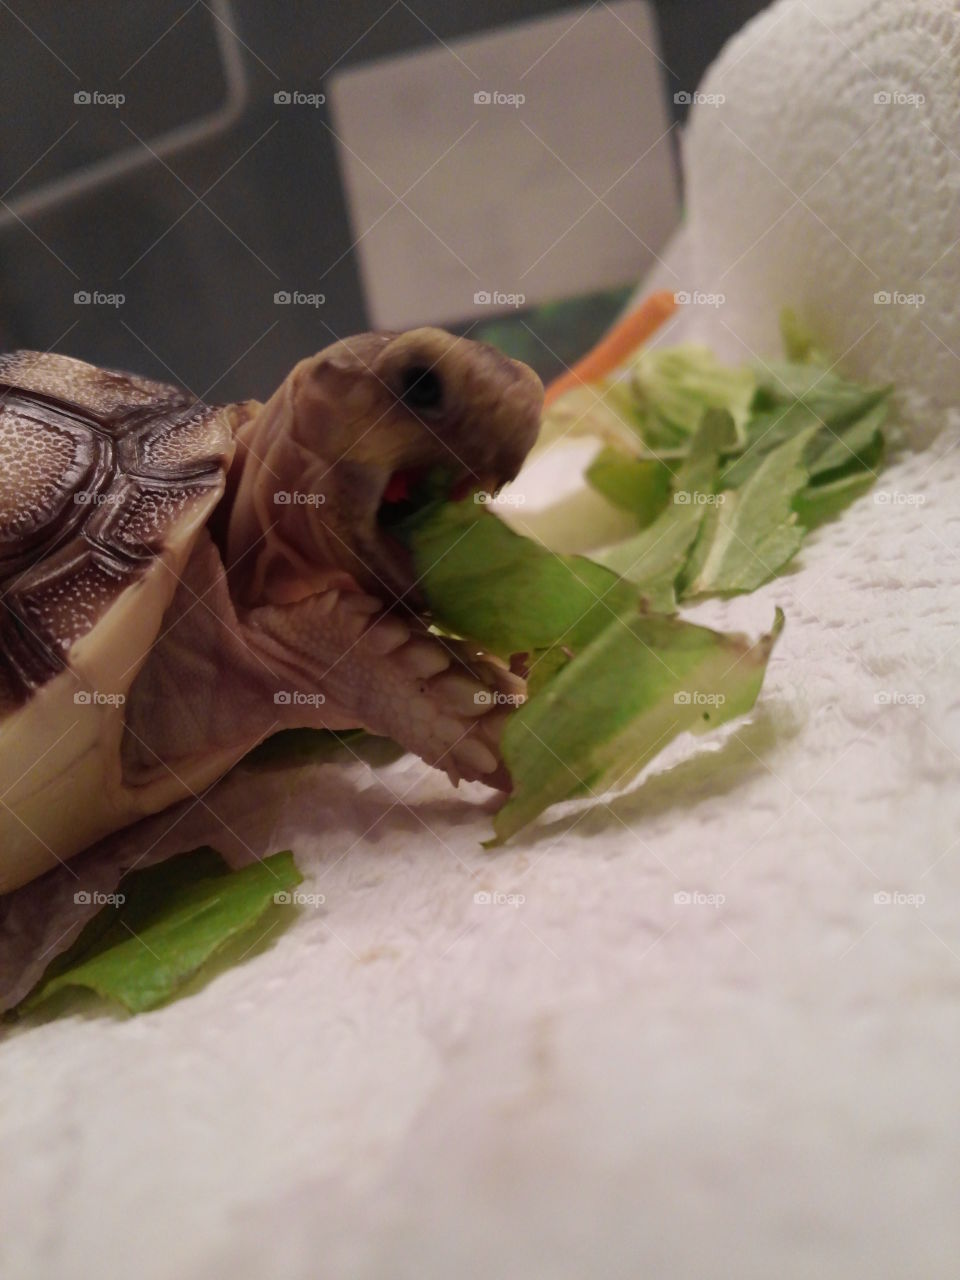 Harold the tortoise